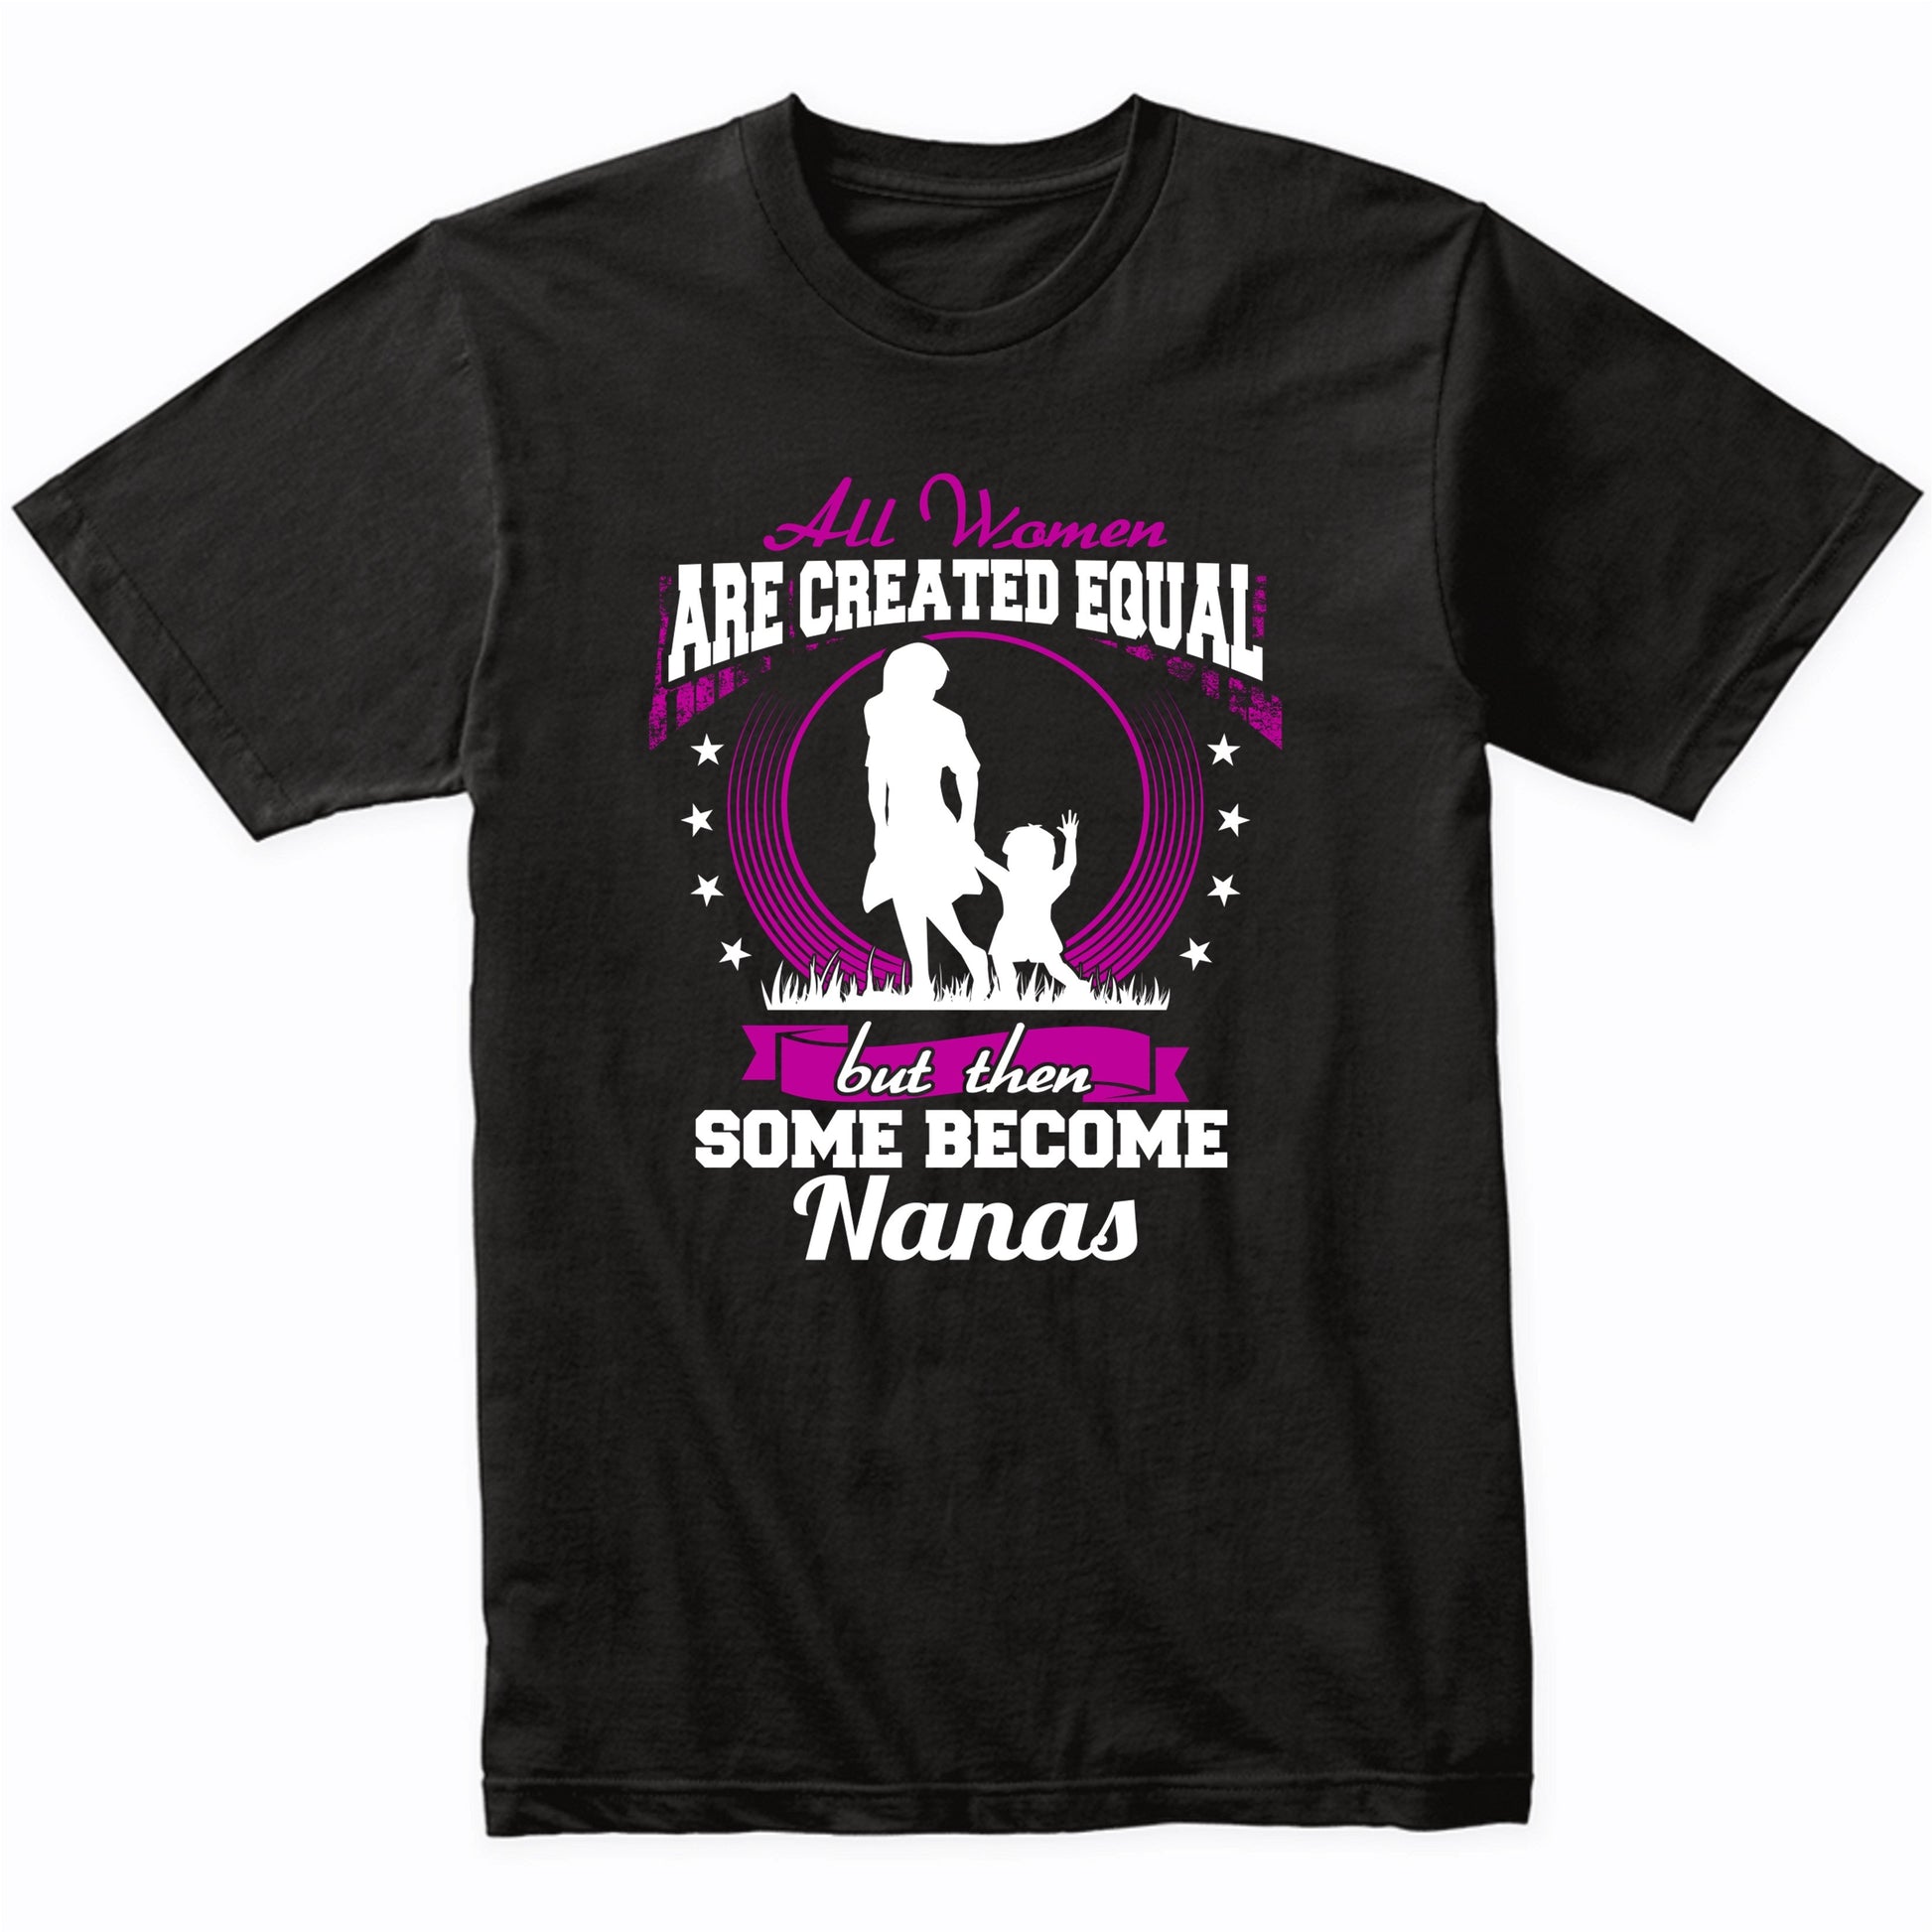 Funny First Time Grandma Shirt - Some Become Nanas T-Shirt